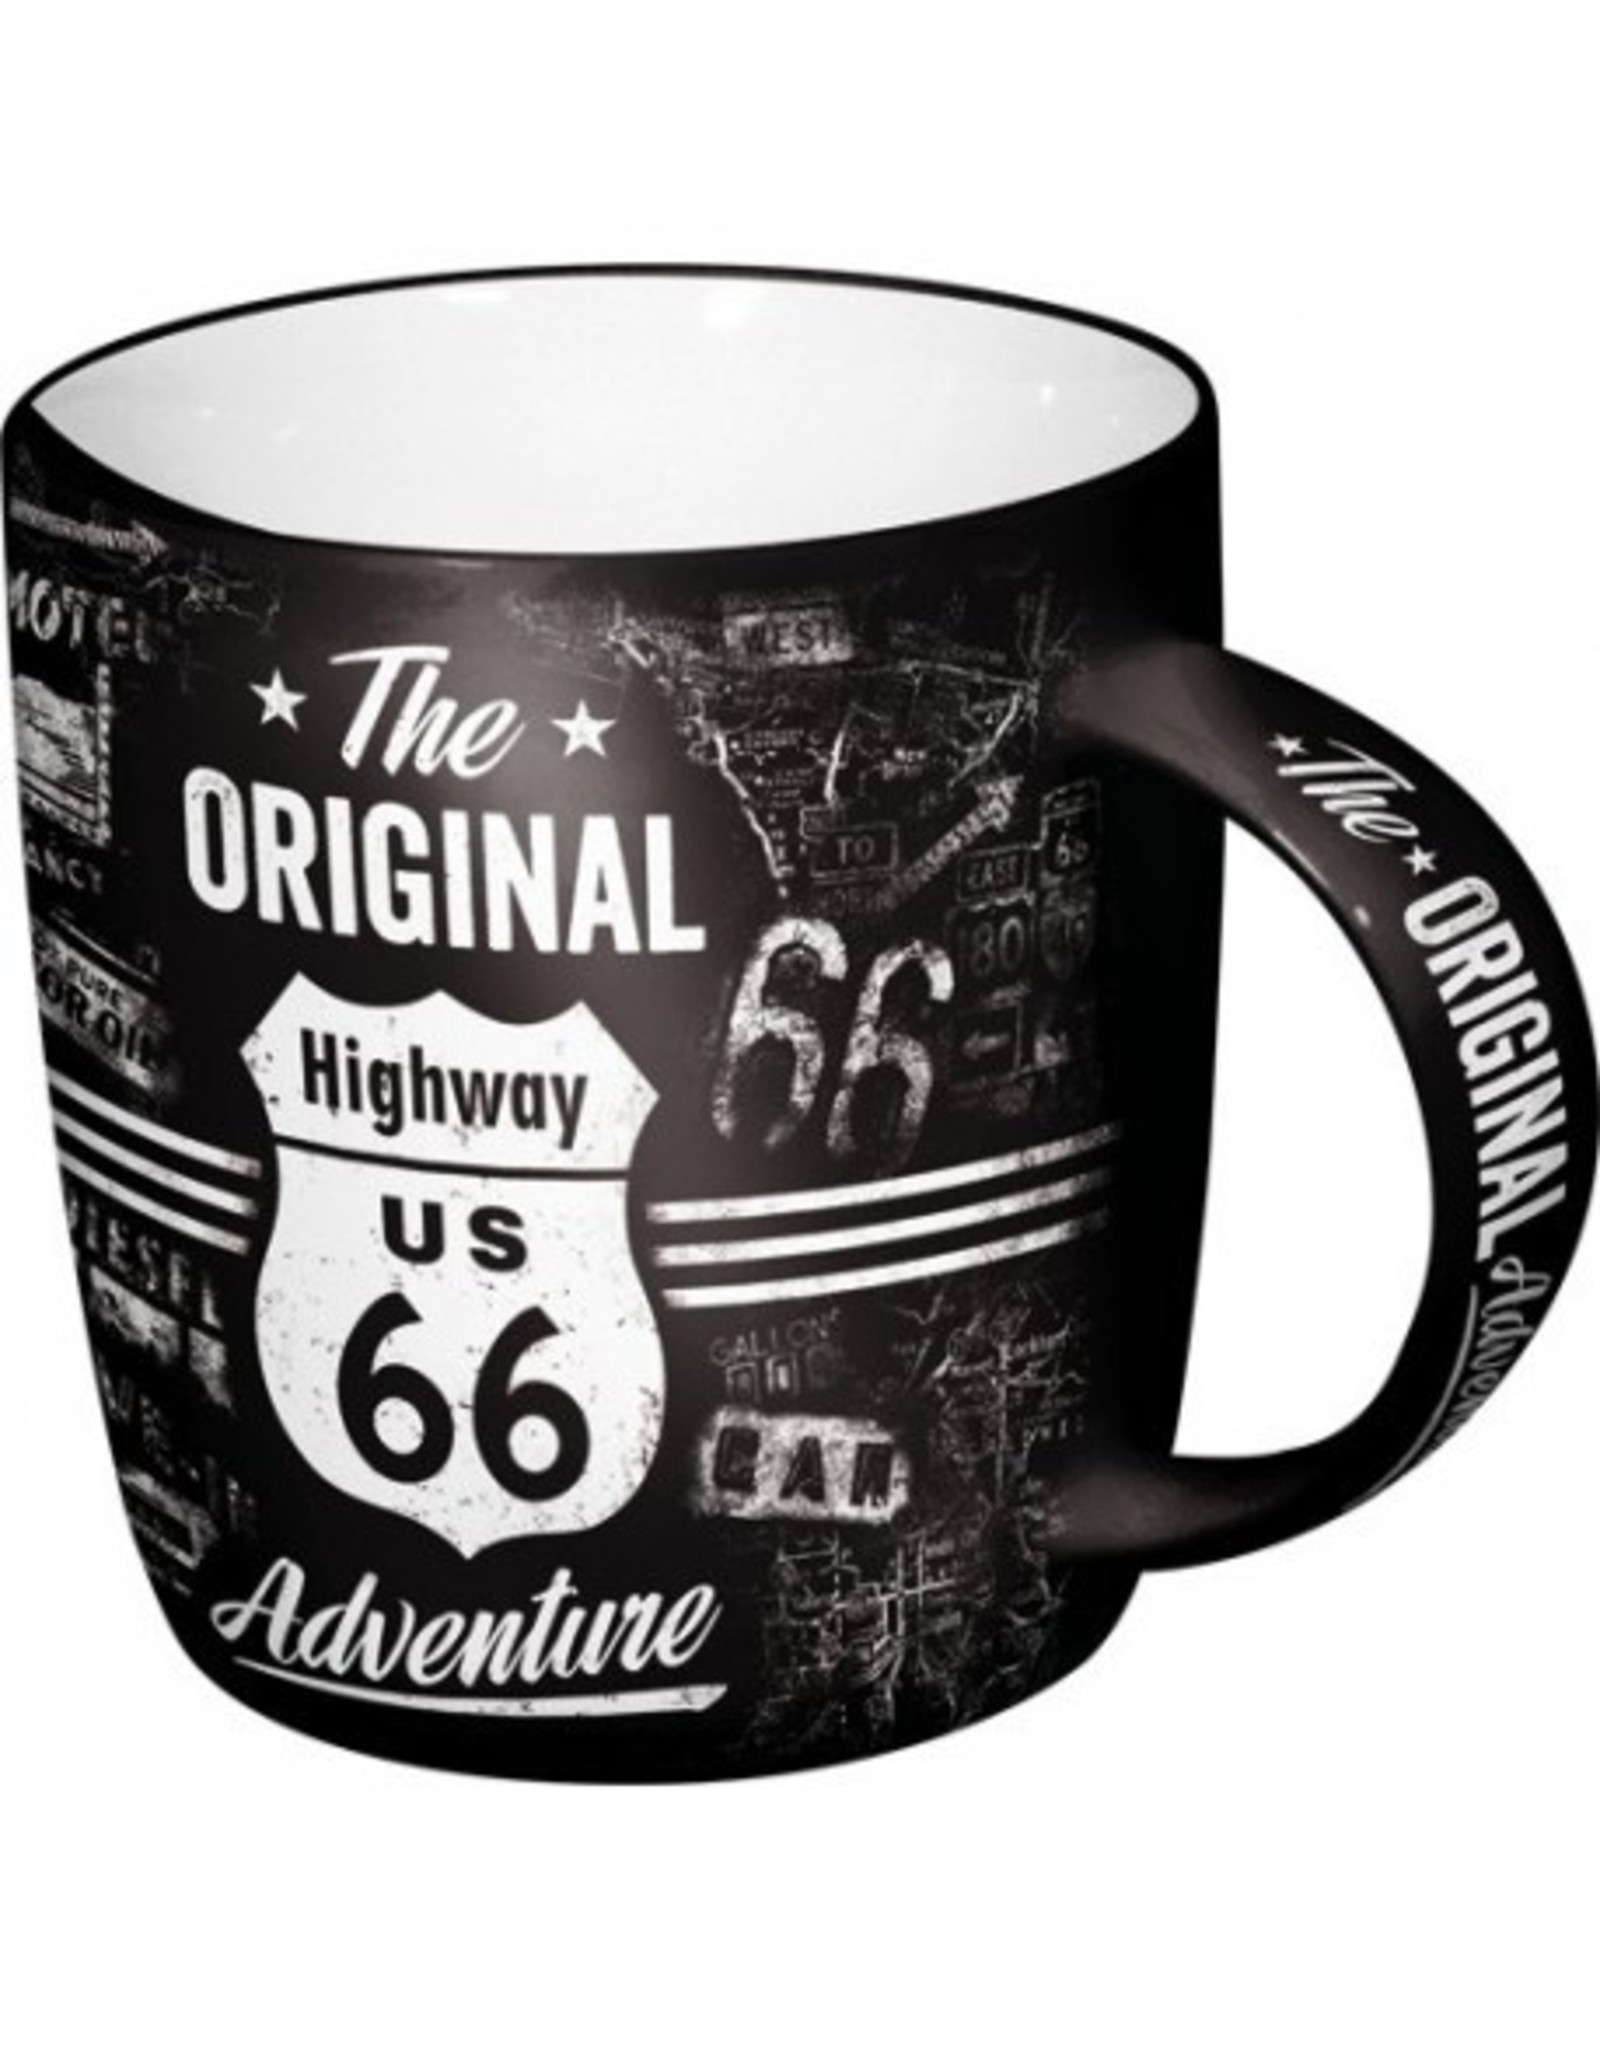 Nostalgic Art Tankards and Mugs - Highway 66 Adventure mug - dishwasher and microwave proof